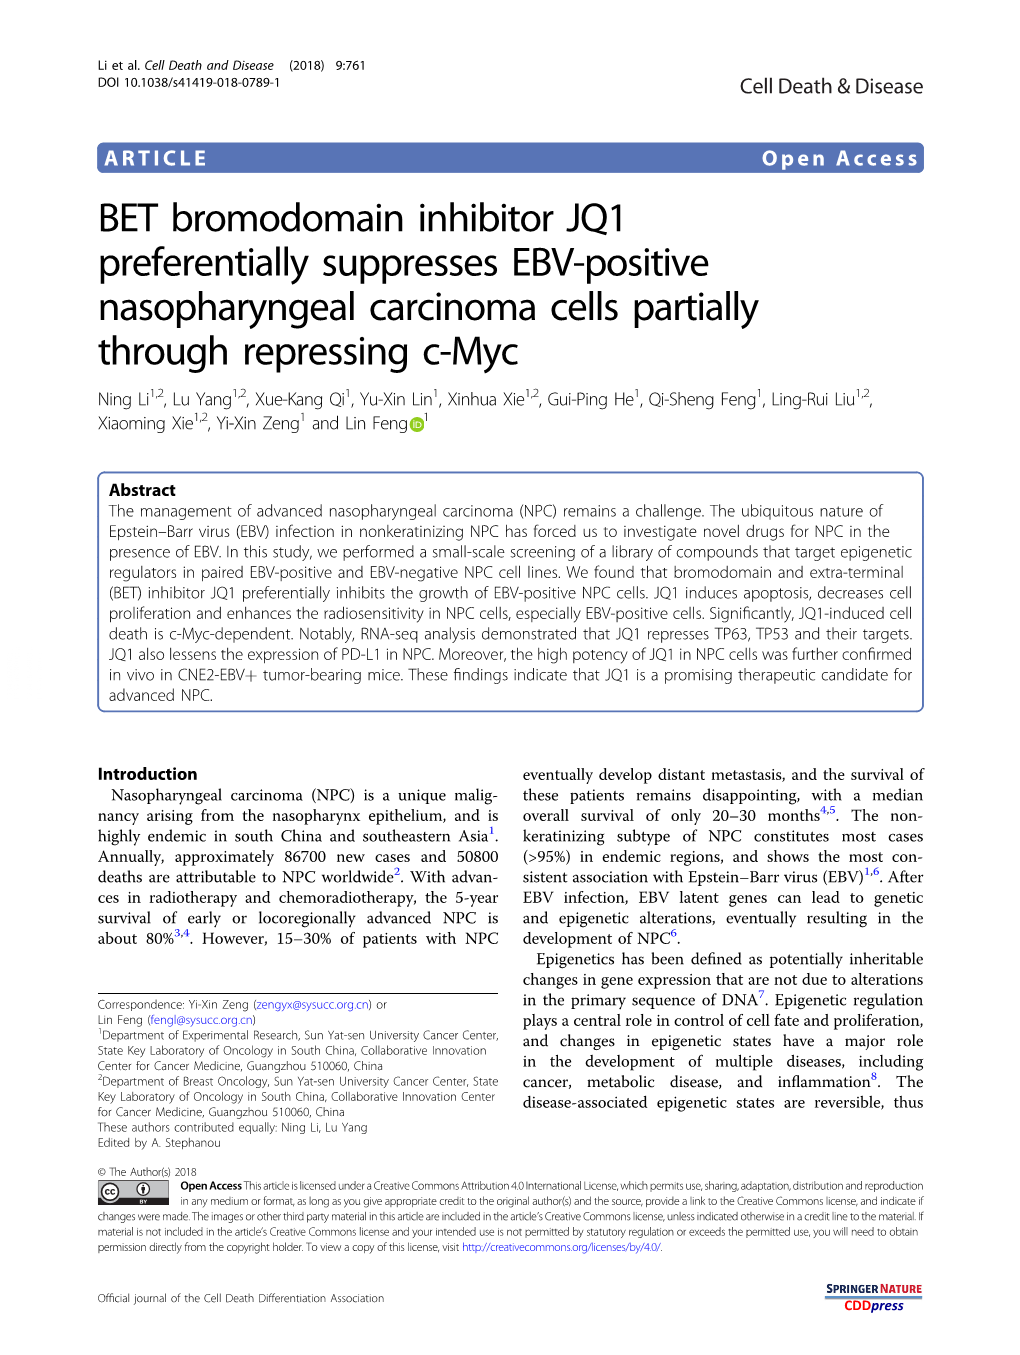 BET Bromodomain Inhibitor JQ1 Preferentially Suppresses EBV